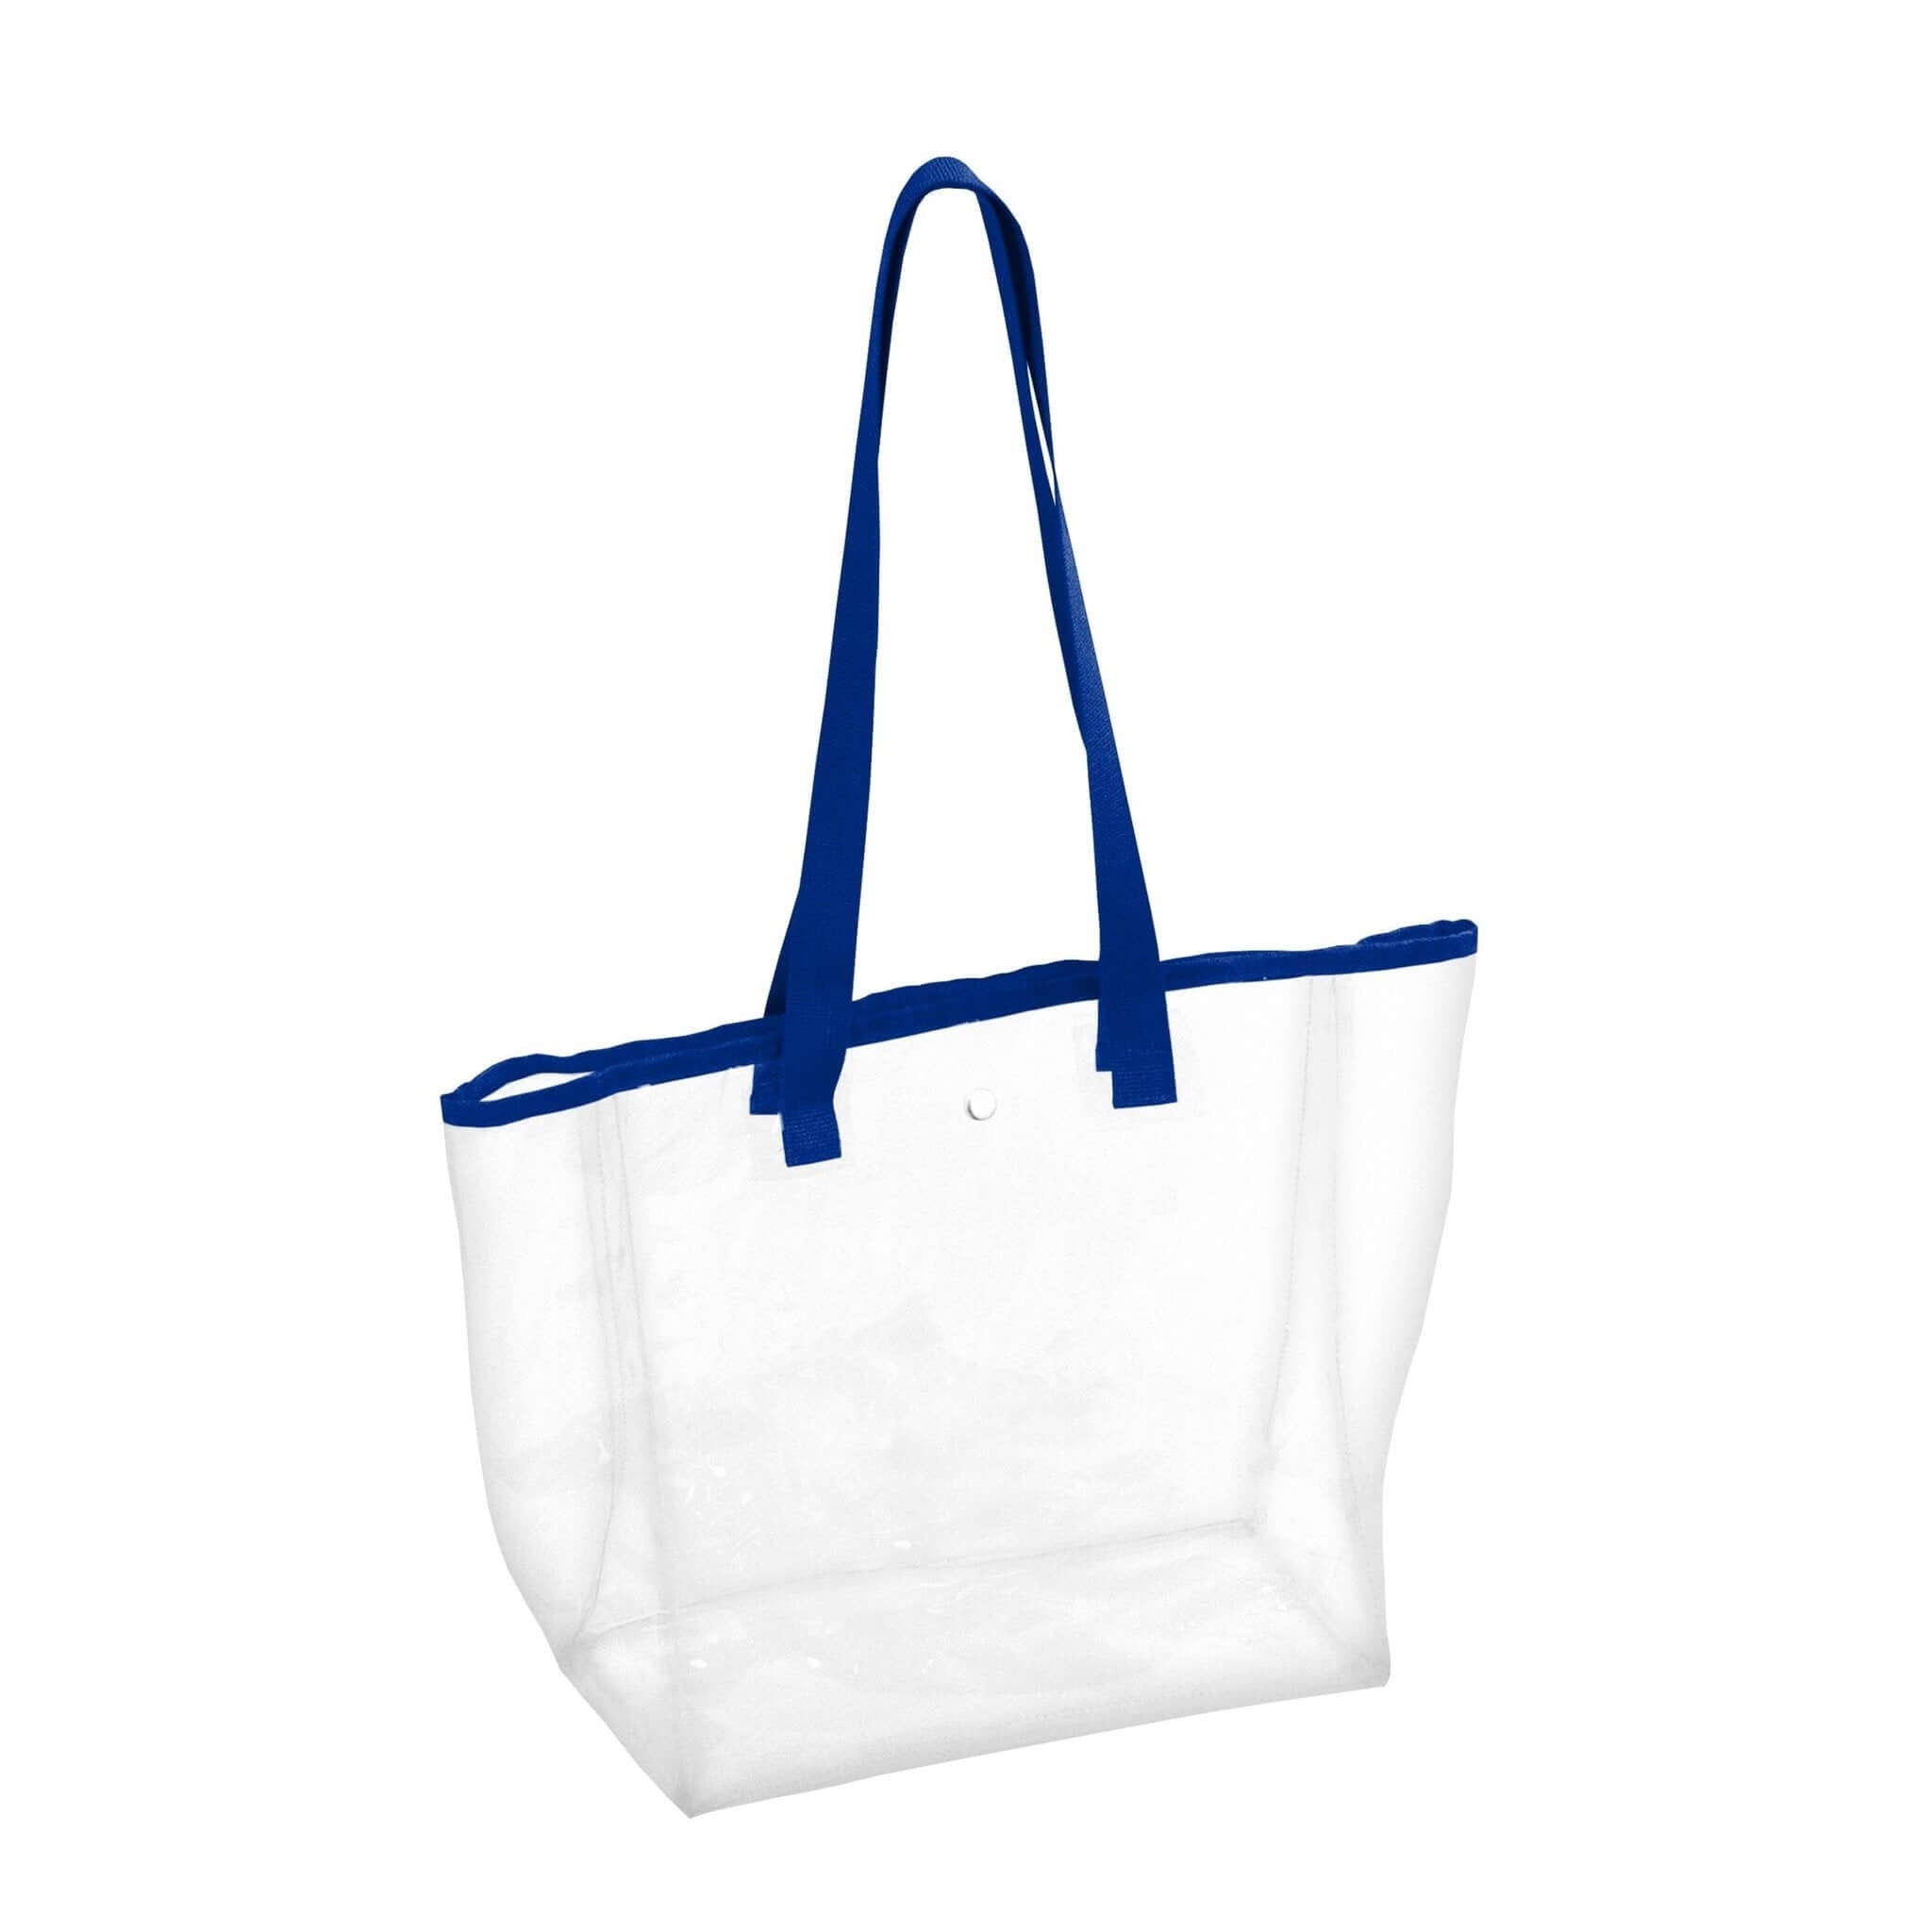 PVC Transparent Clear Tote Shopping Bag